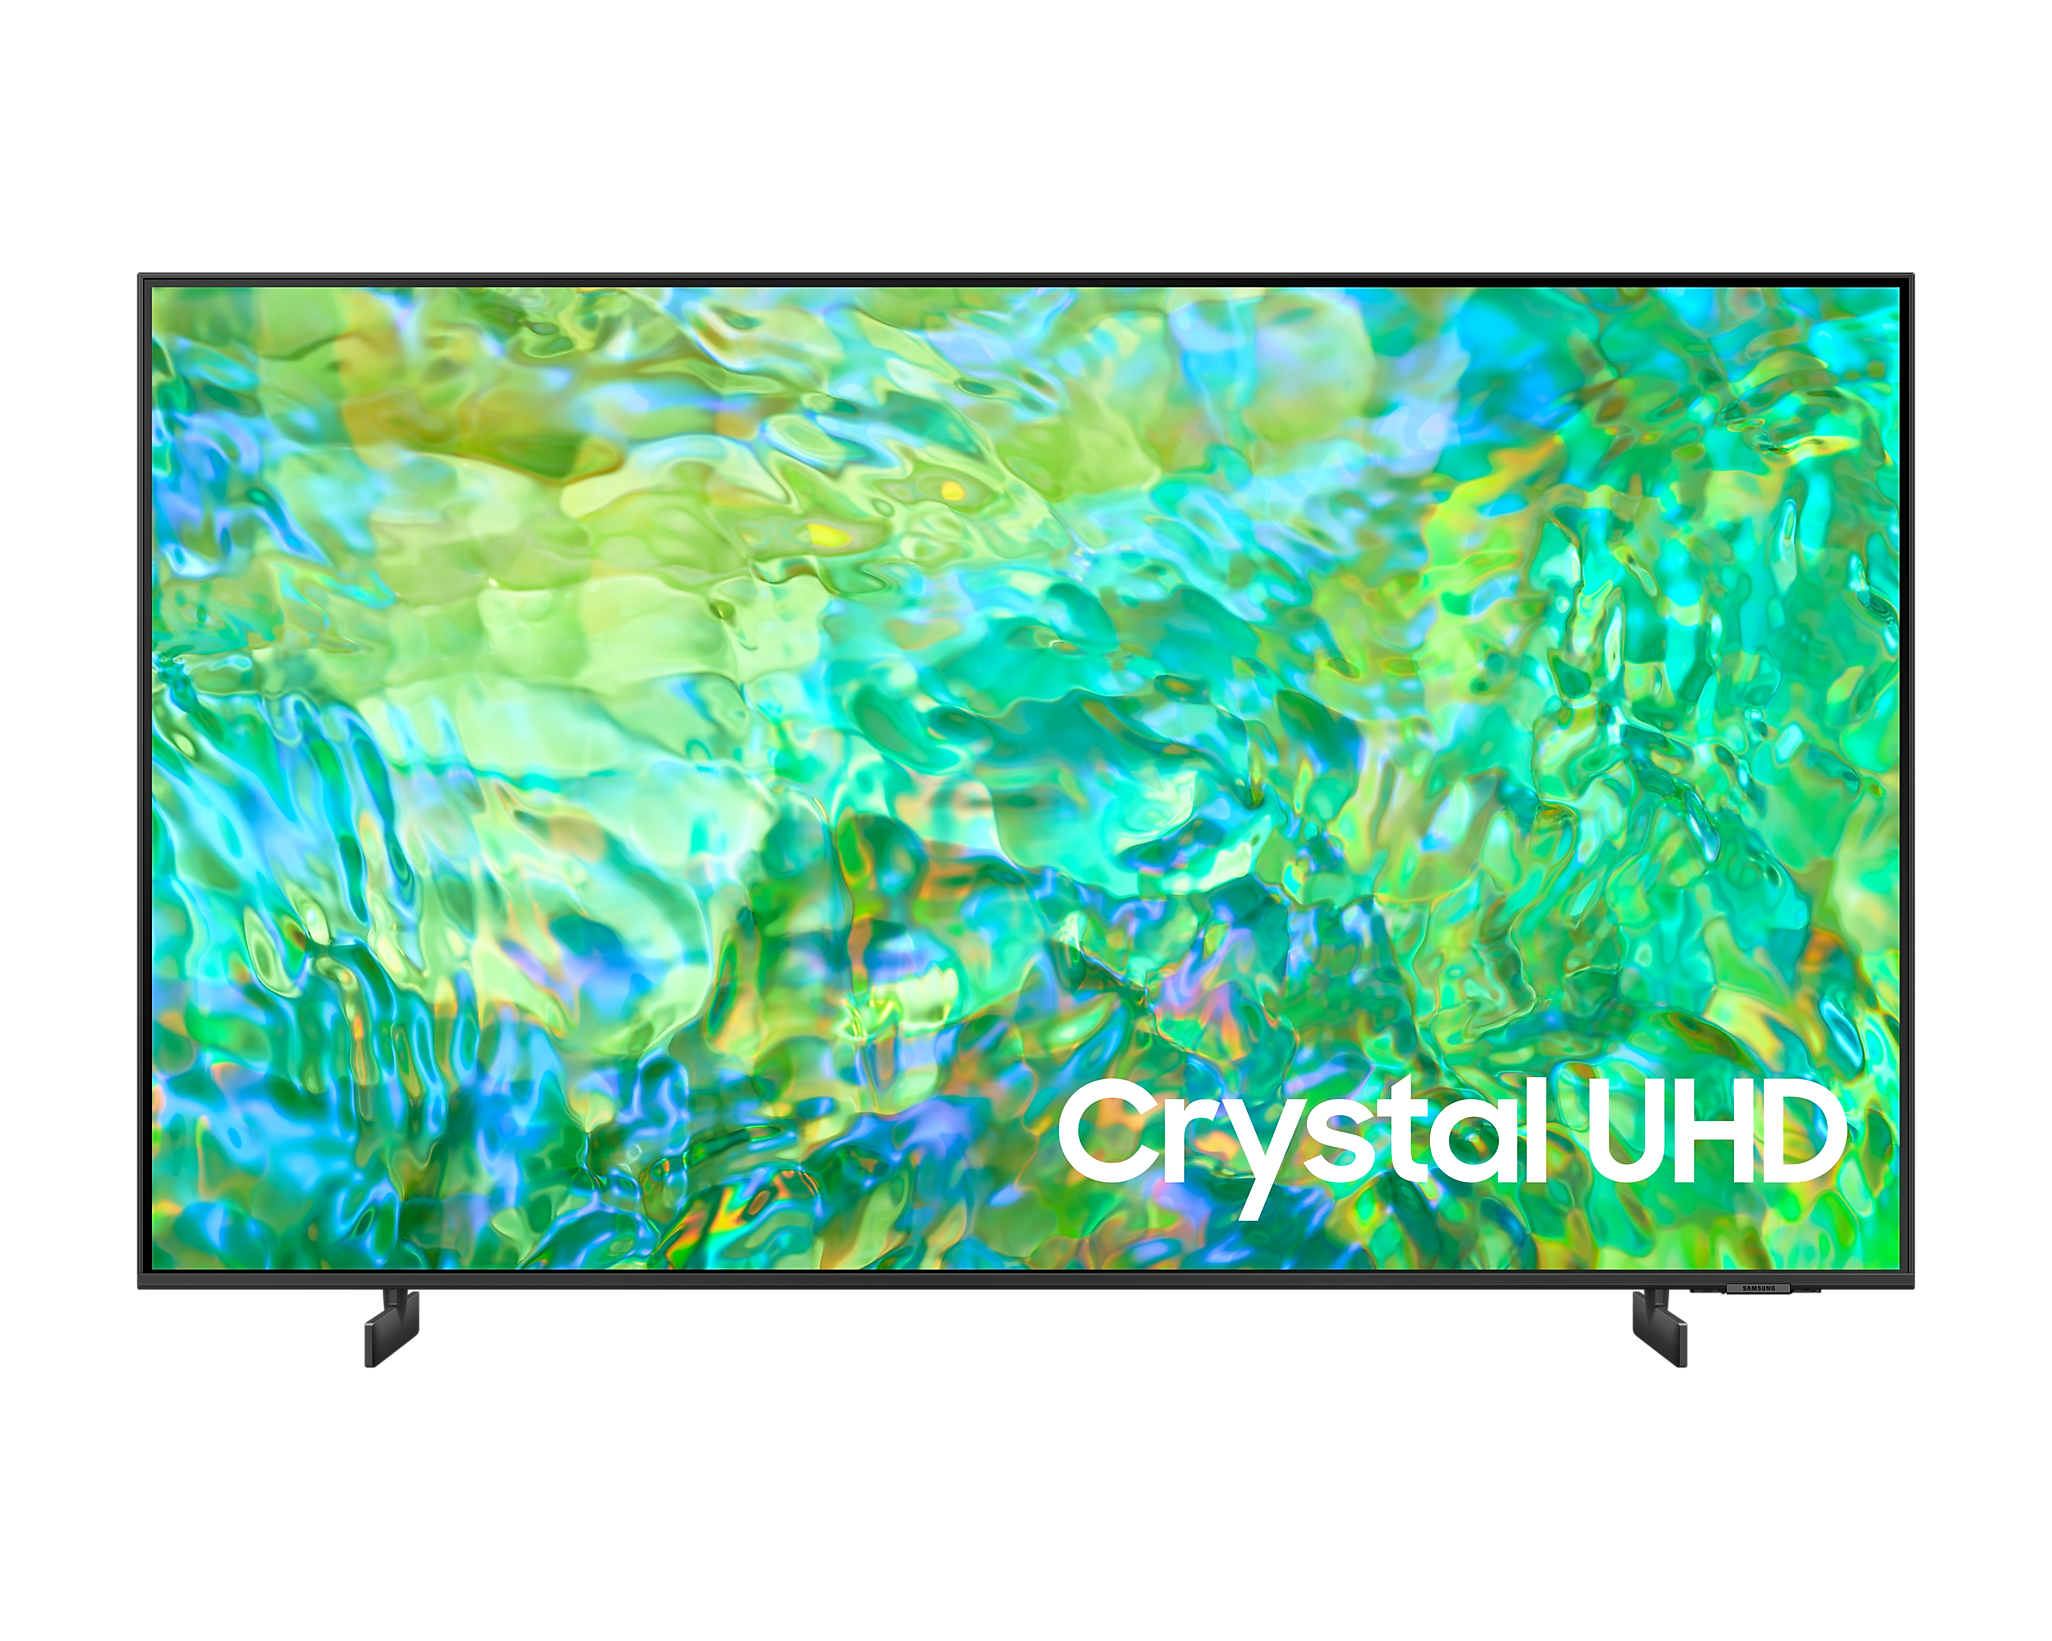 Samsung 三星 CU8000 系列 Crystal UHD 4K 電視